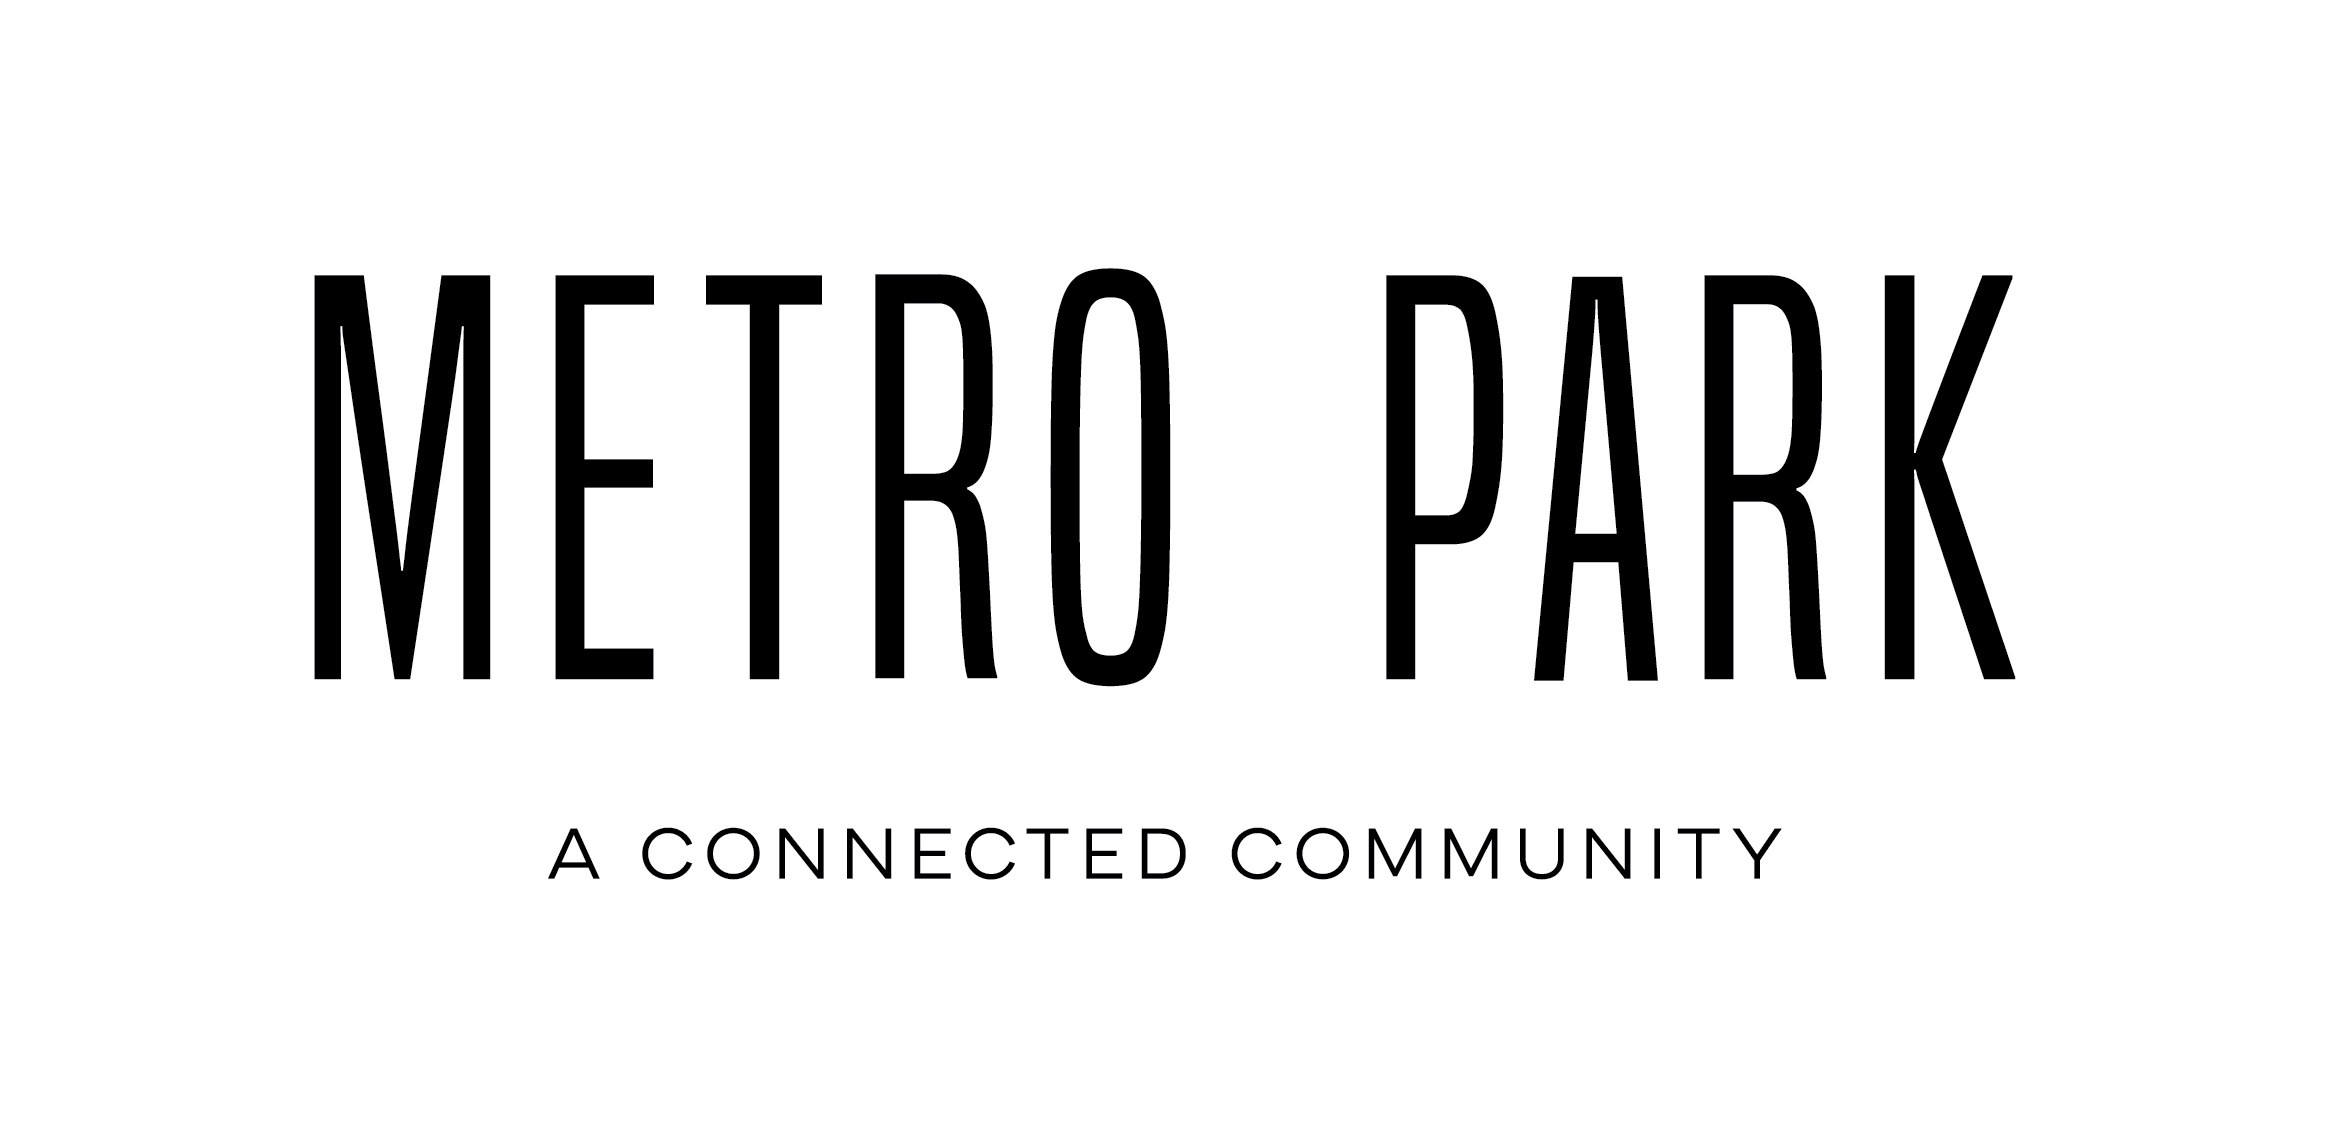 Metro Park